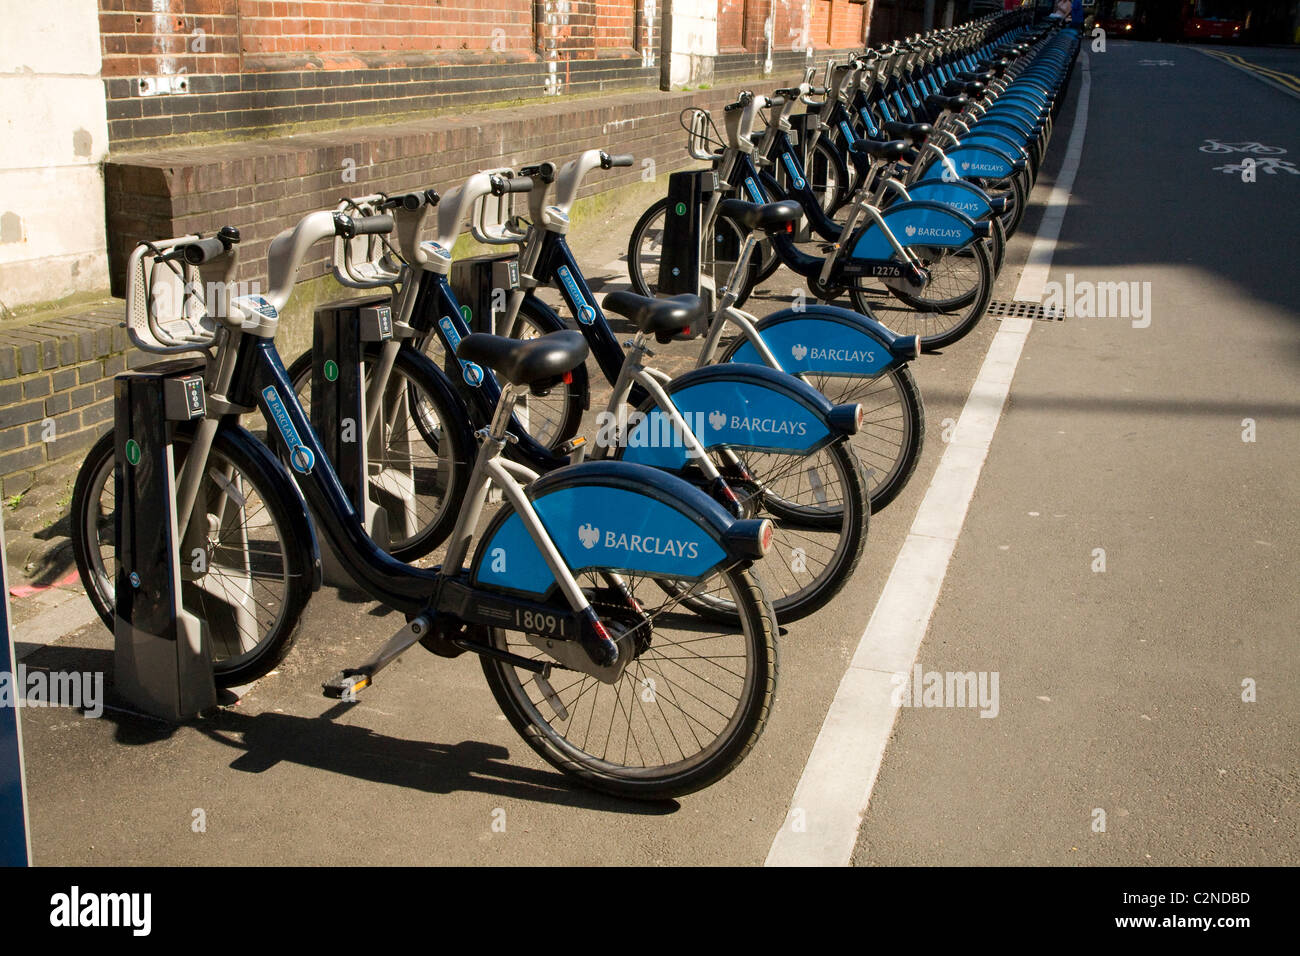 Barclays sponsored bicycle hire scheme London England waterloo Stock Photo